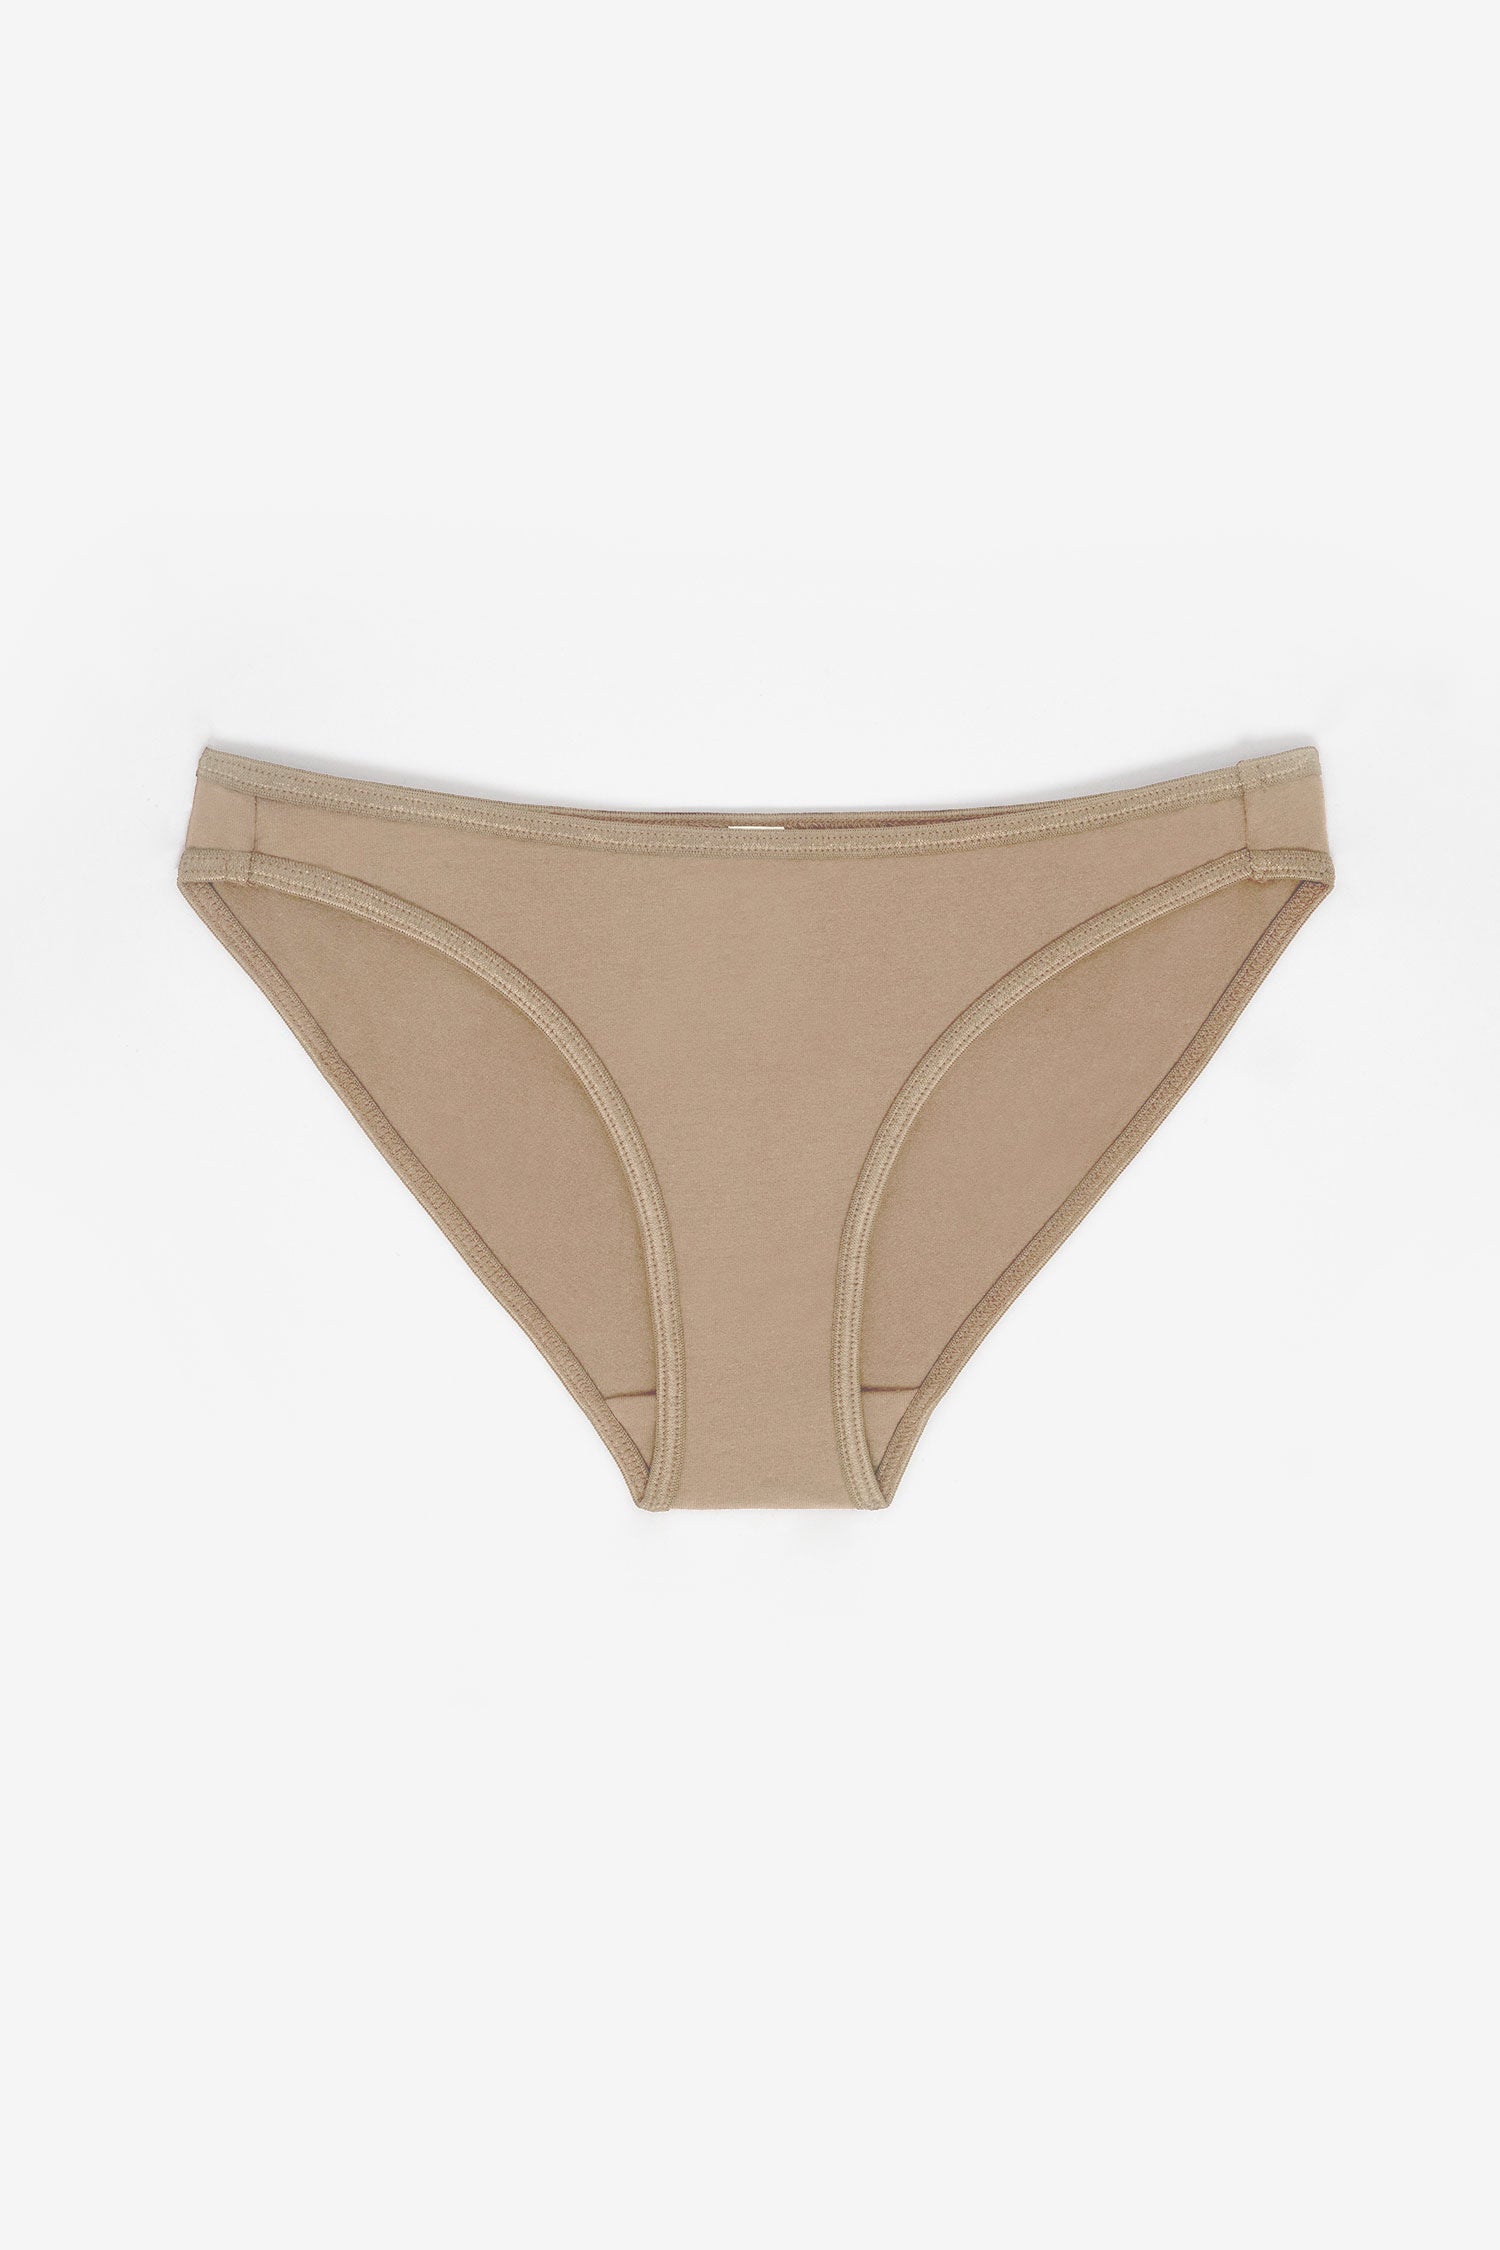 Dip Invisible Line Women's Large Bikini Underwear Pack - Assorted, 3 pk -  Kroger